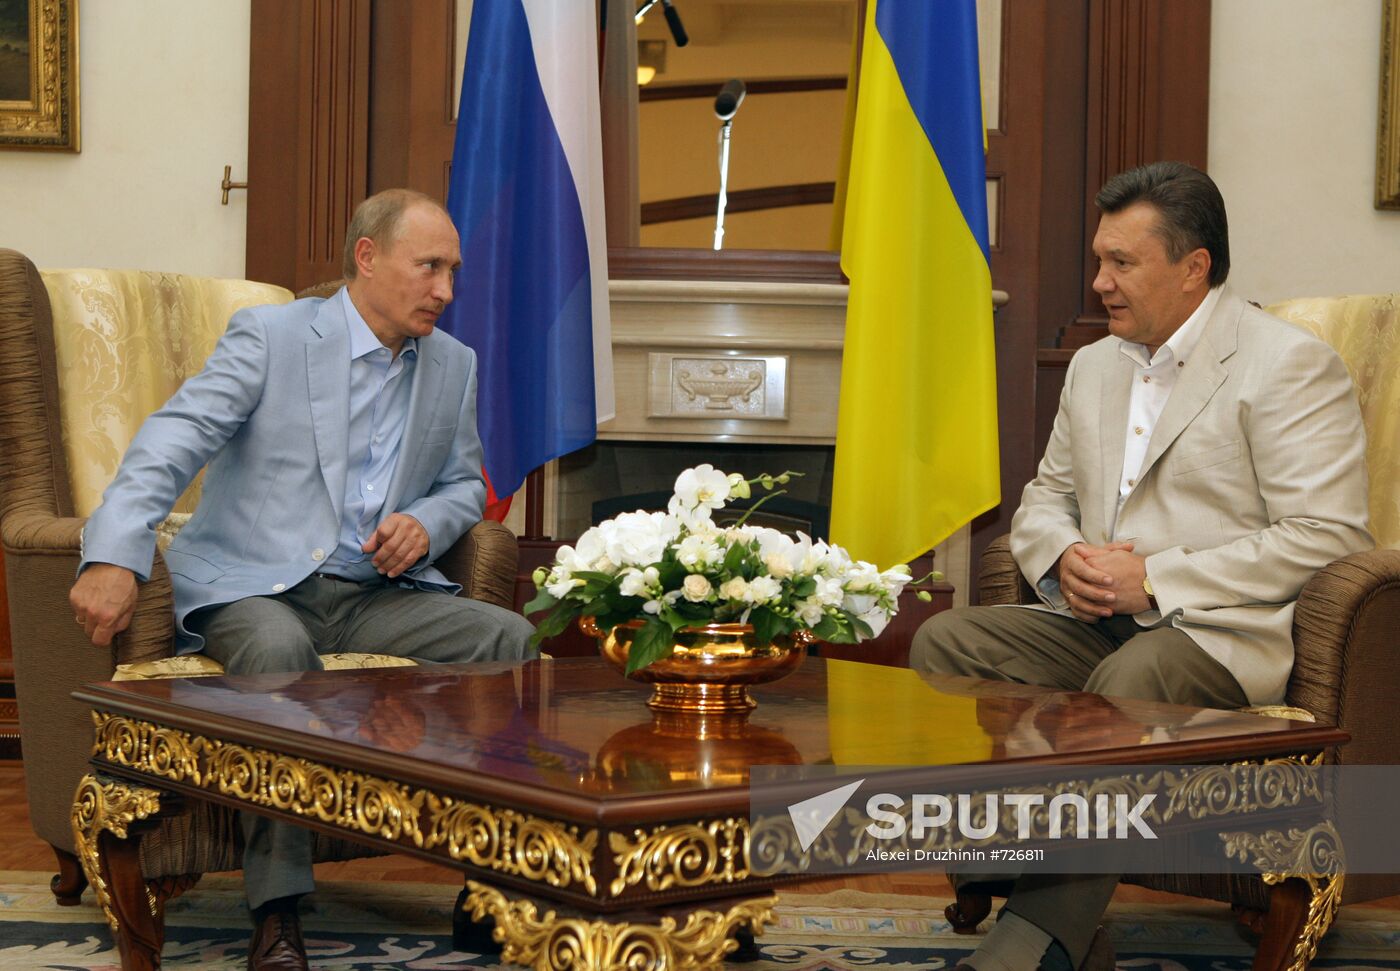 Vladimir Putin and Viktor Yanukovych